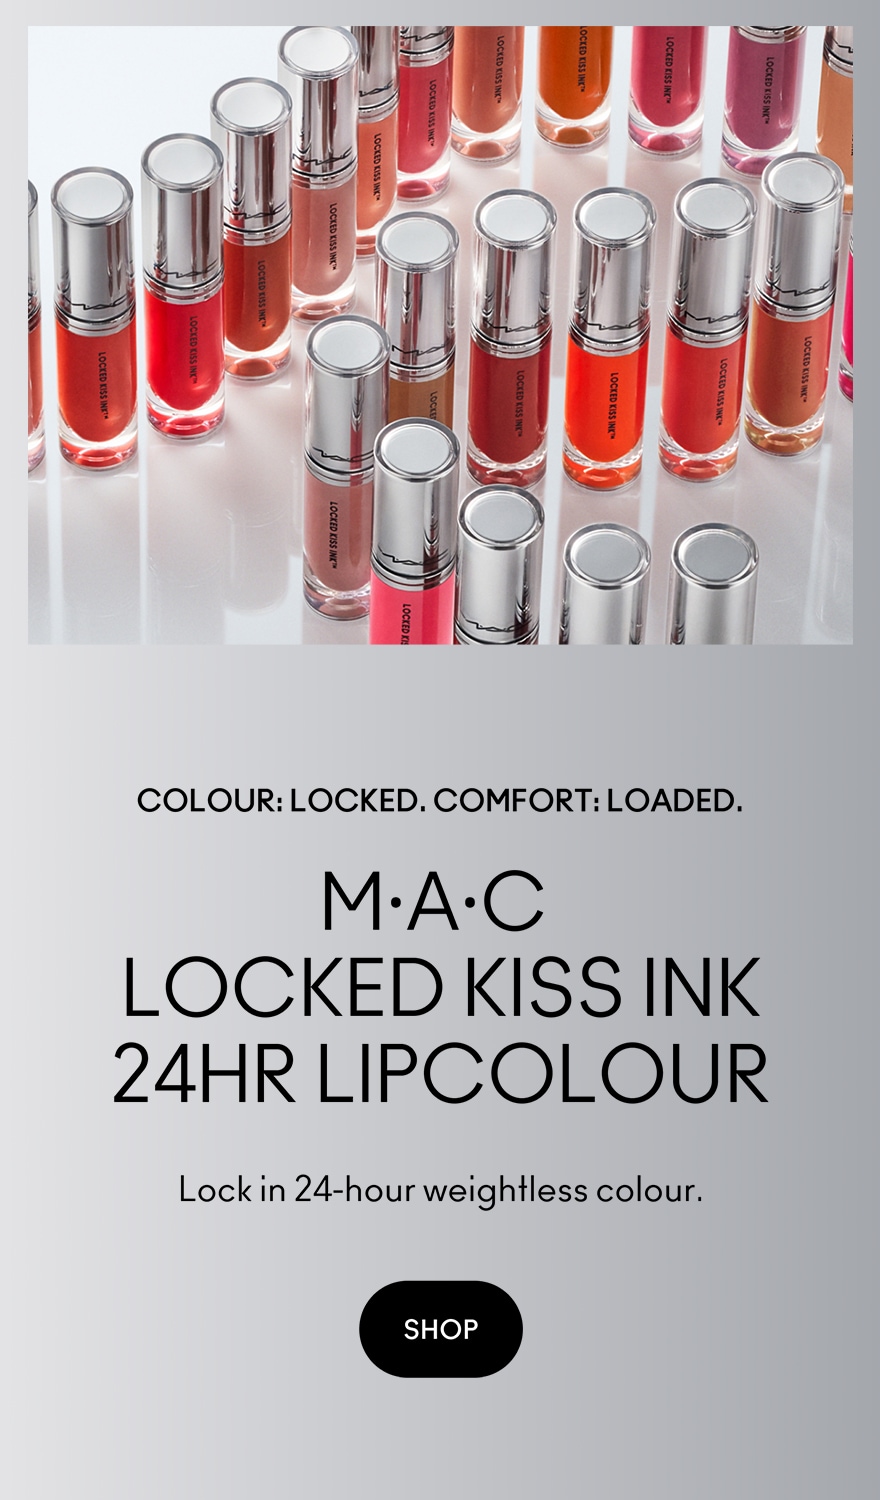 M·A·C LOCKED KISS INK